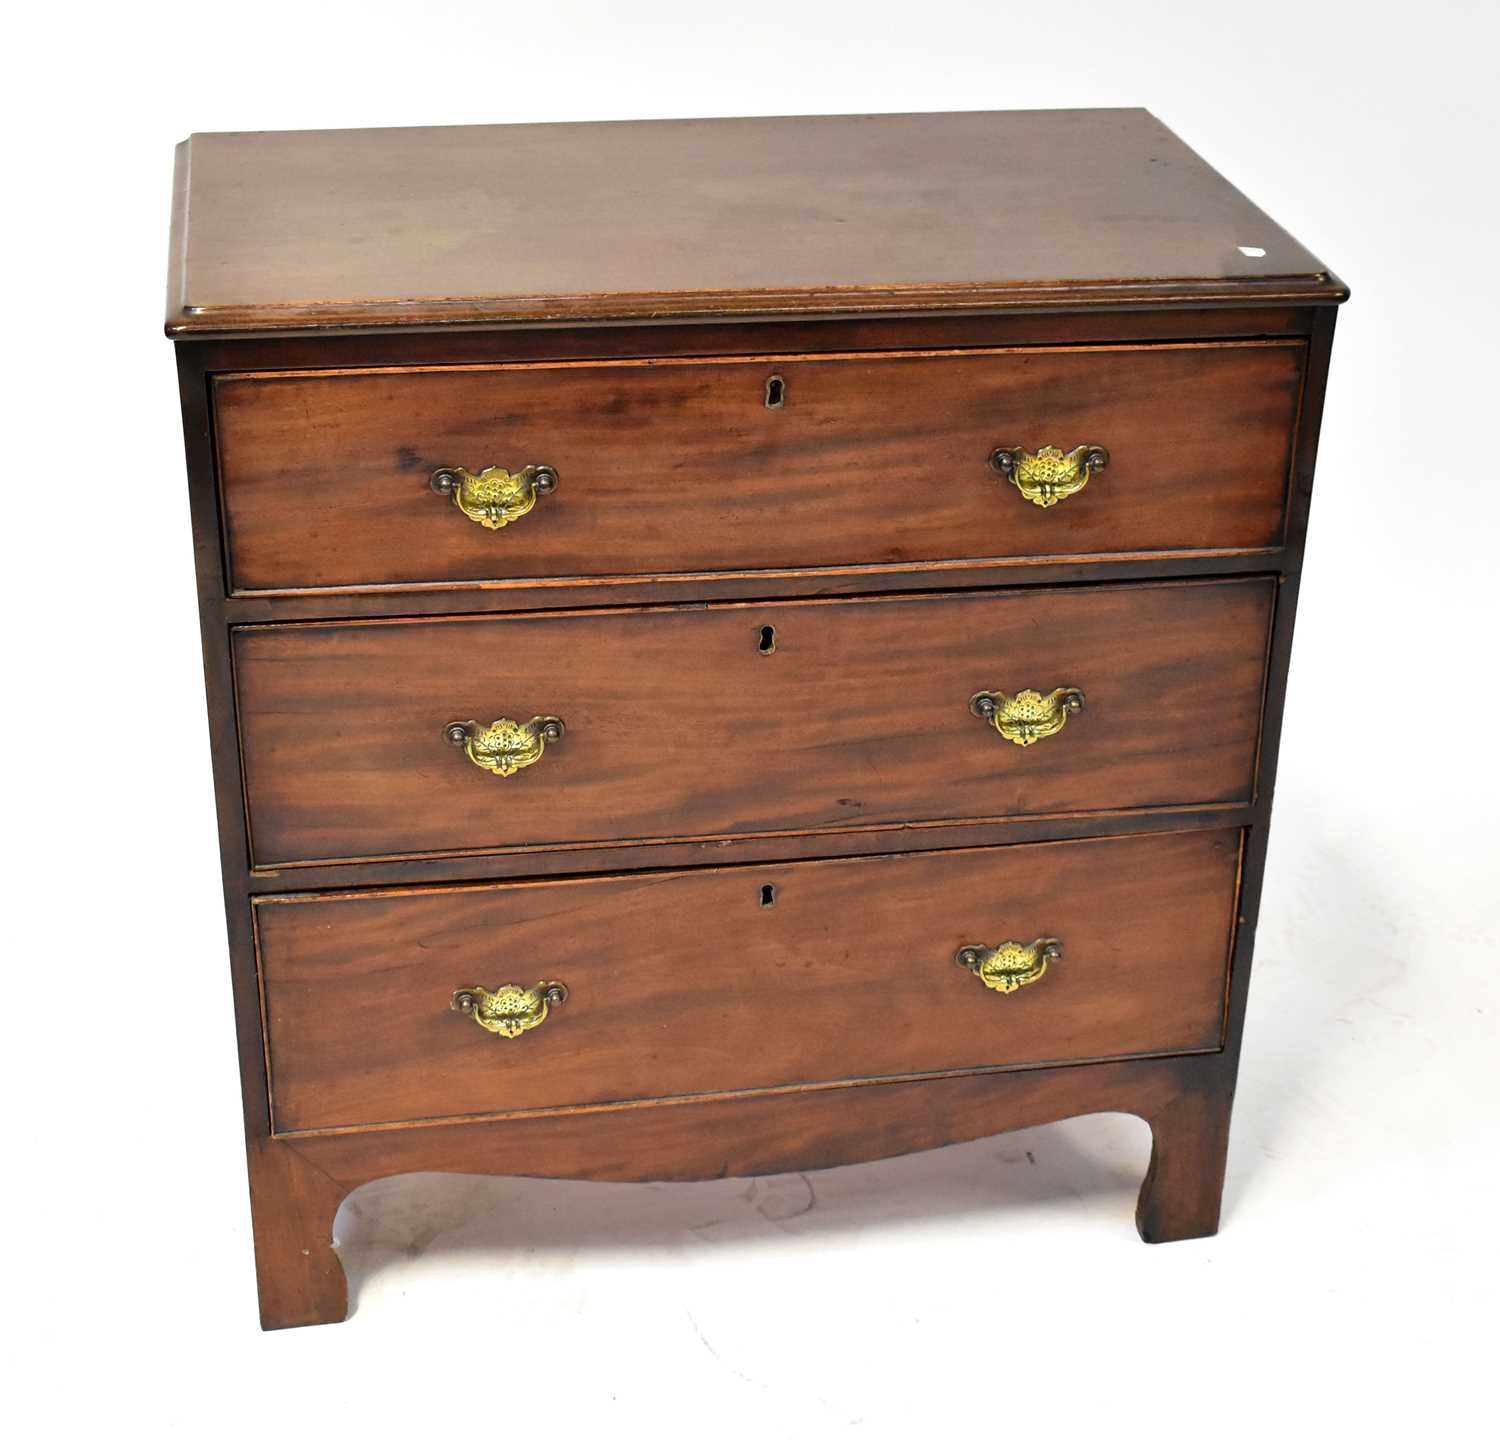 A Georgian mahogany three-drawer chest of small proportions, raised on bracket feet.Dimensions: 76 x